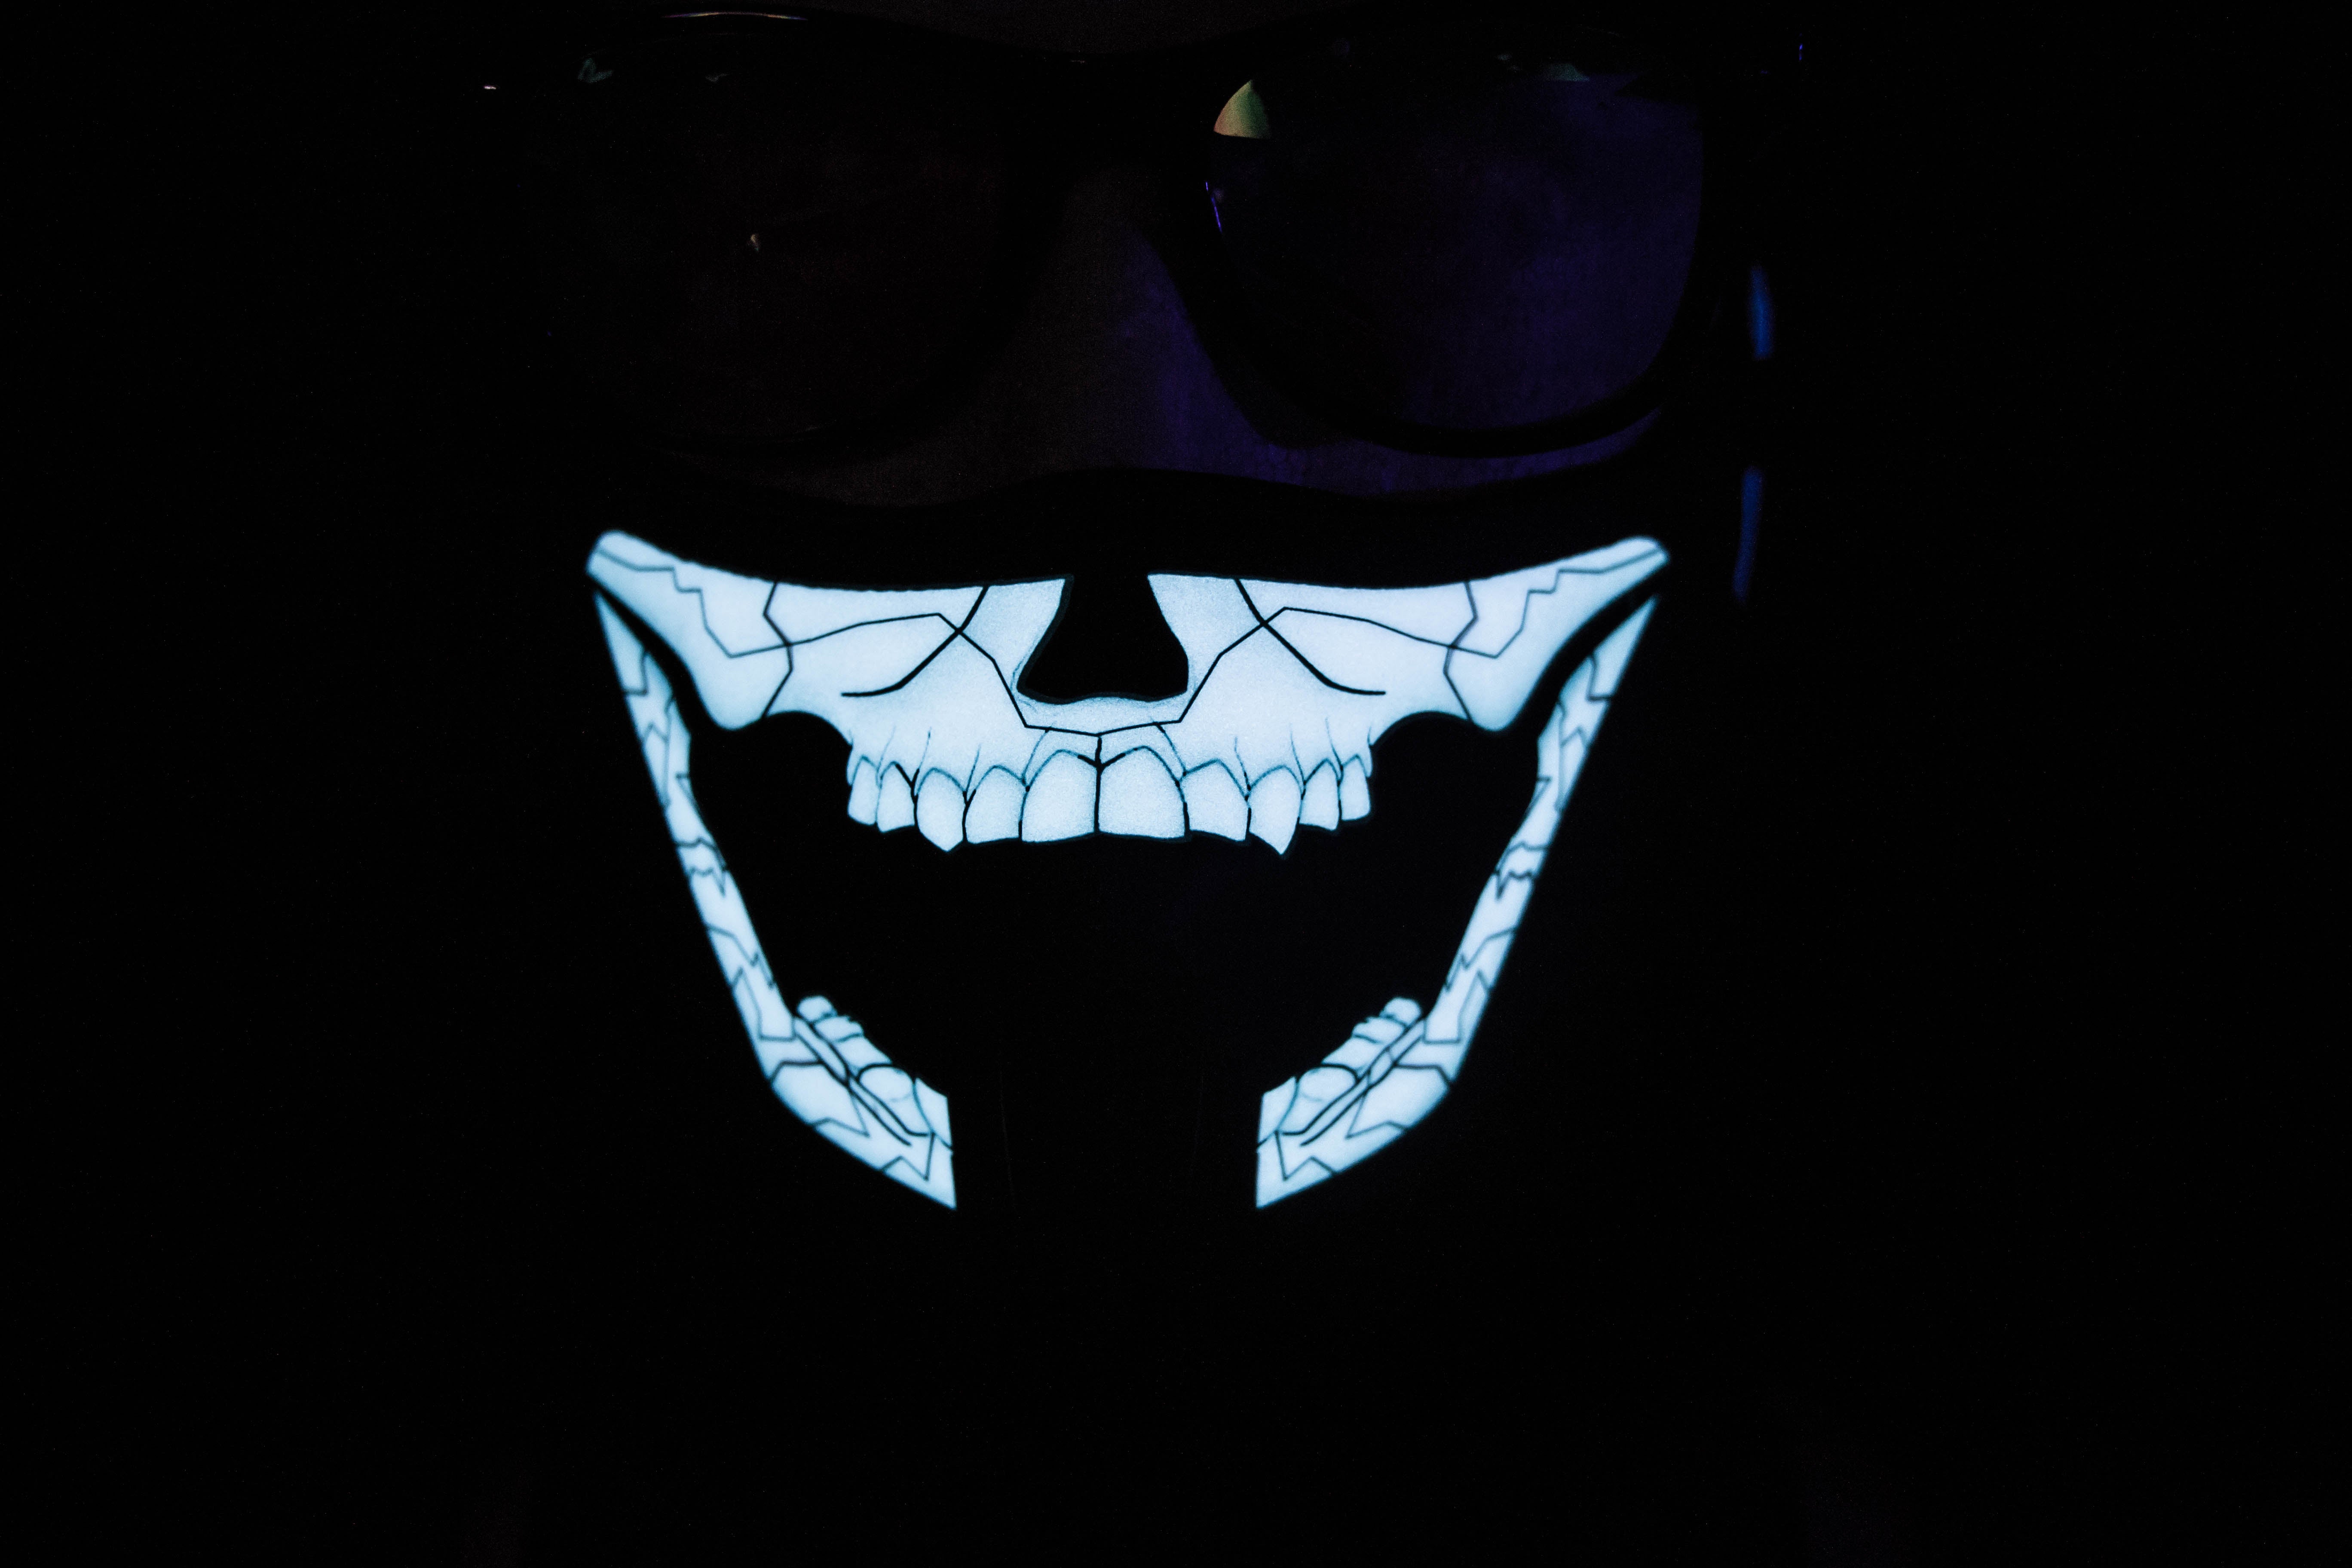 Gacked Skull LED Light up Panel Mask - SuperFried